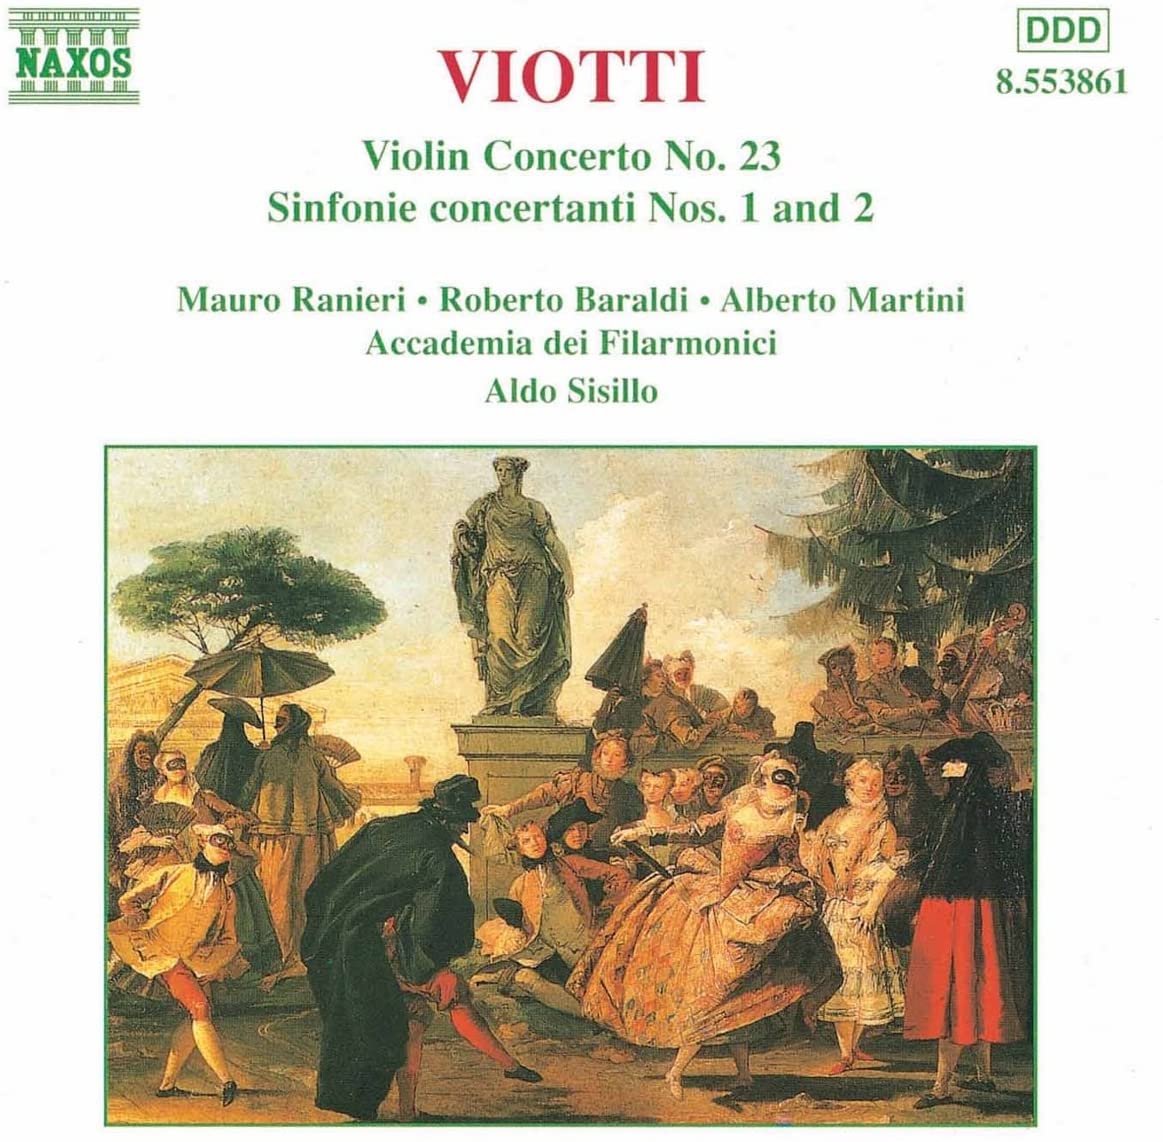 VIOTTI: Violin Concerto No. 23, Sinfonie Concertanti